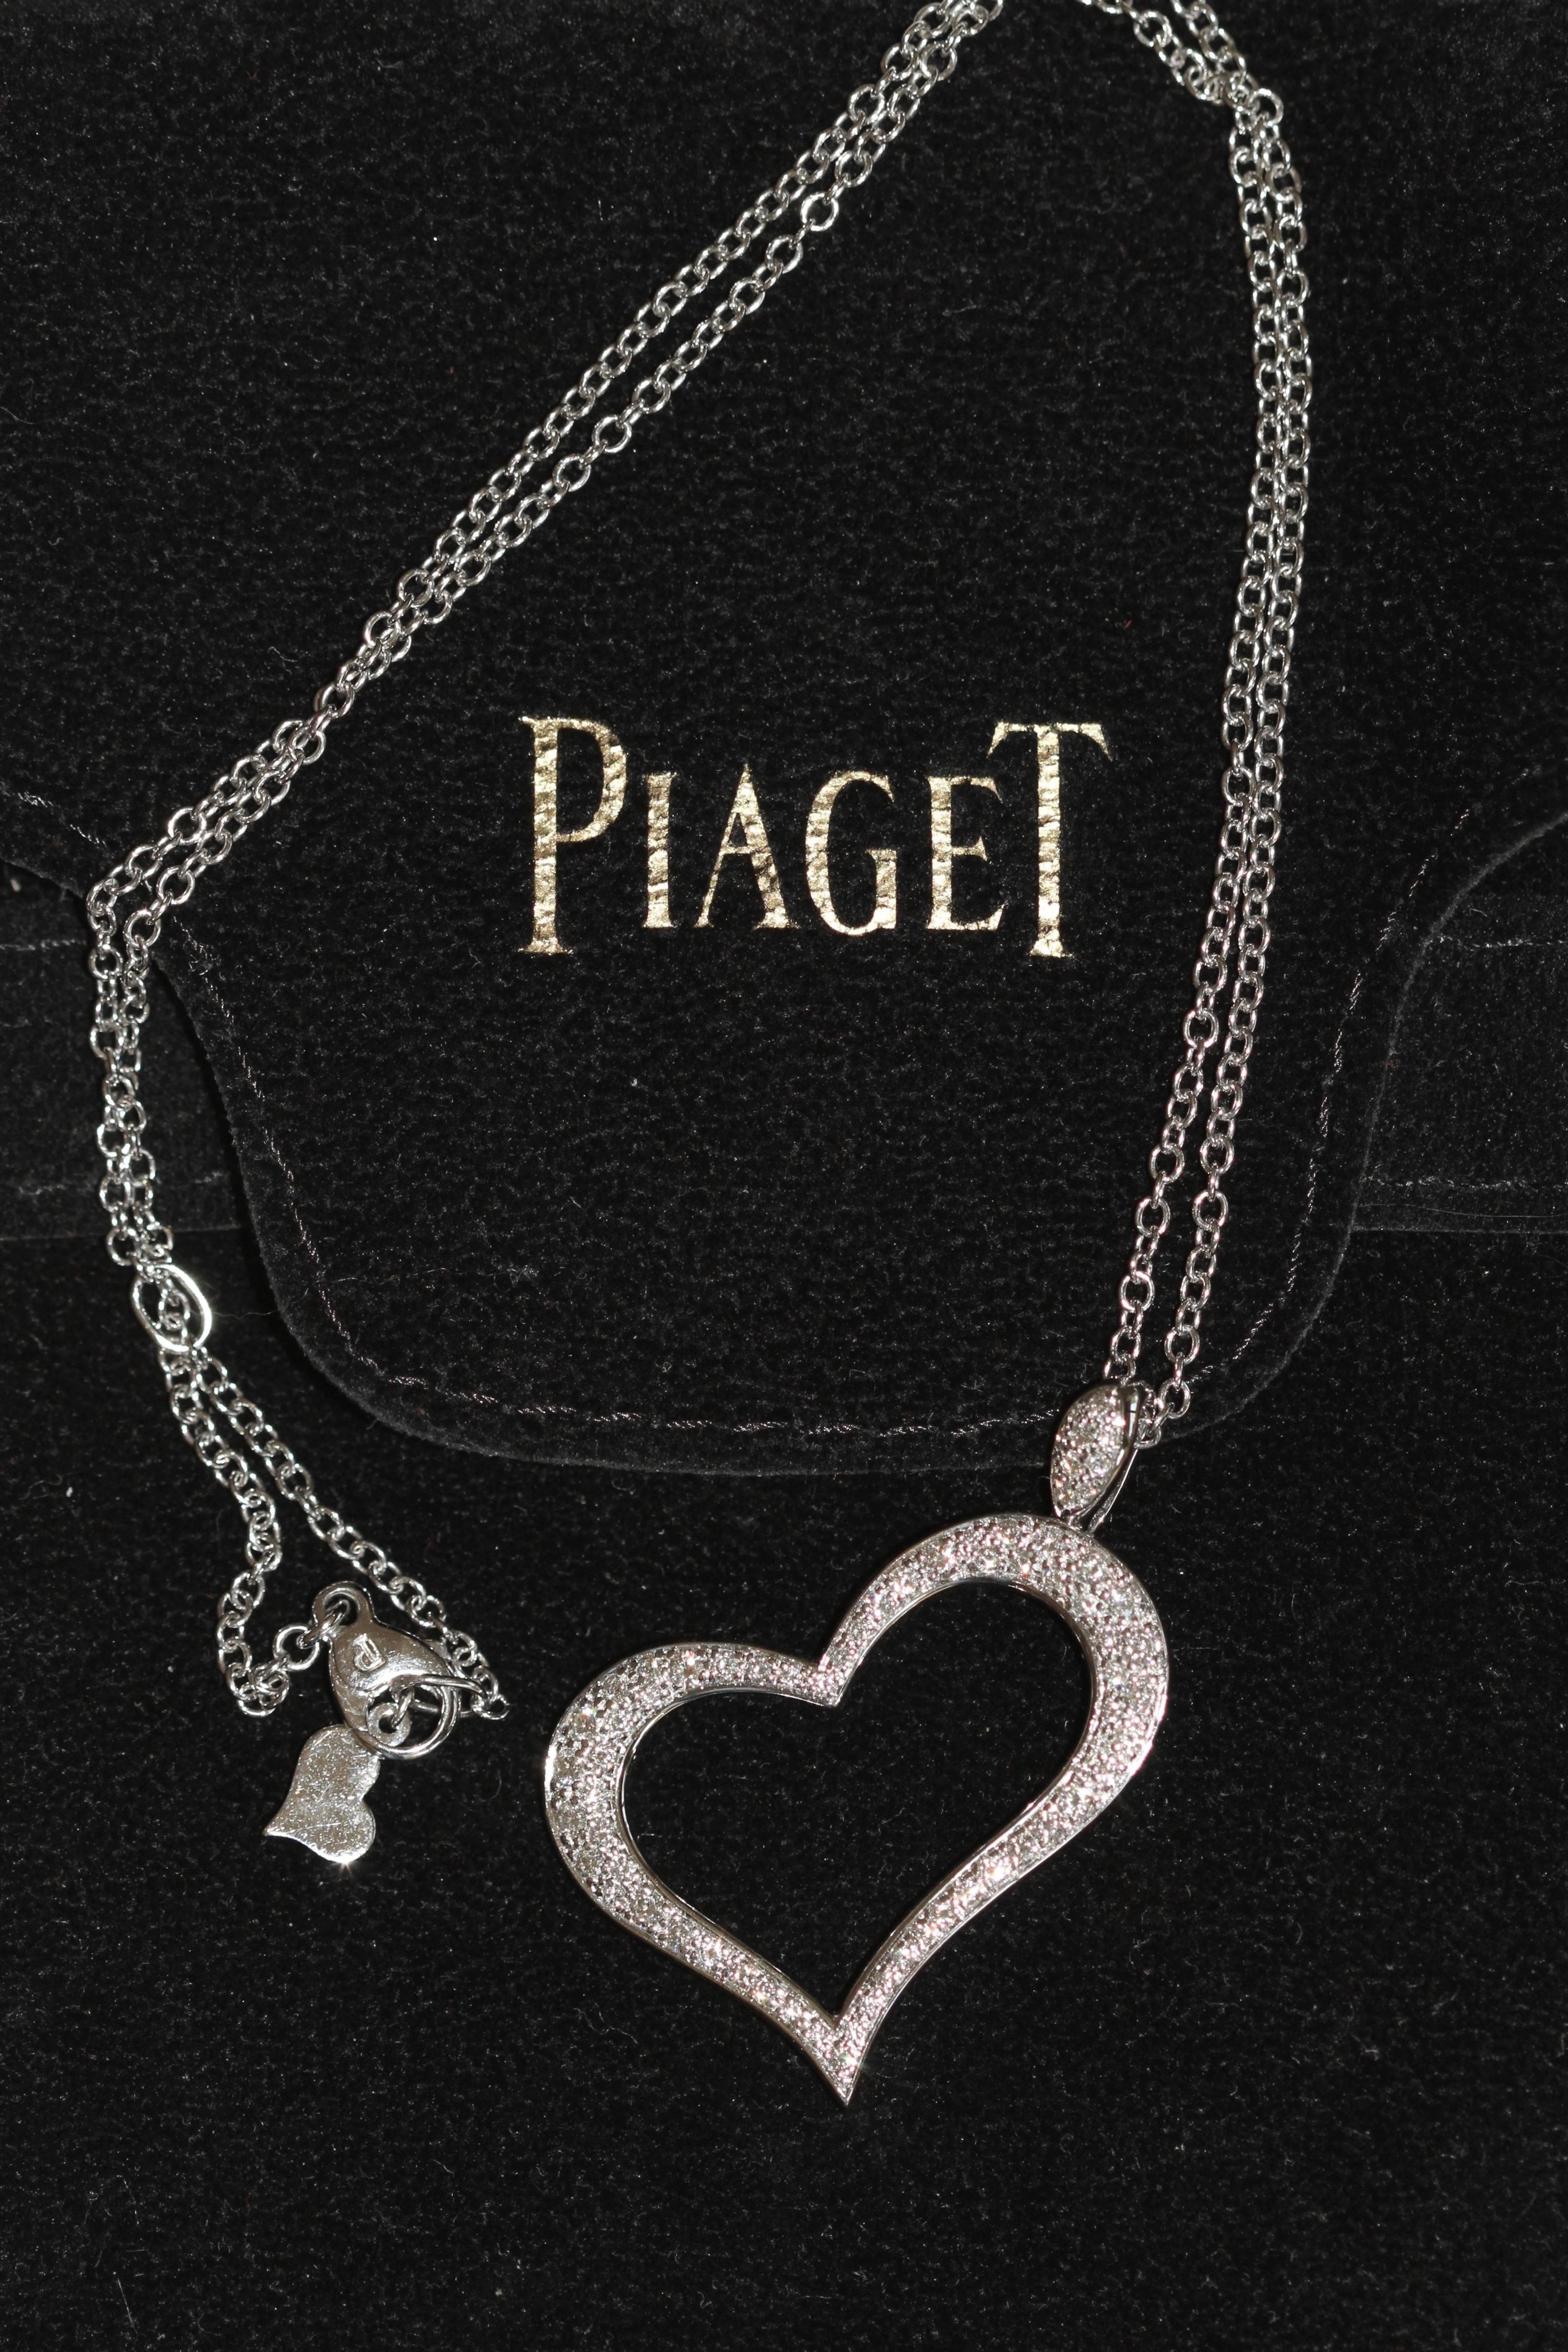 Women's or Men's Piaget Heart-Shaped 18 Karat White Gold Pendant Necklace with Diamonds